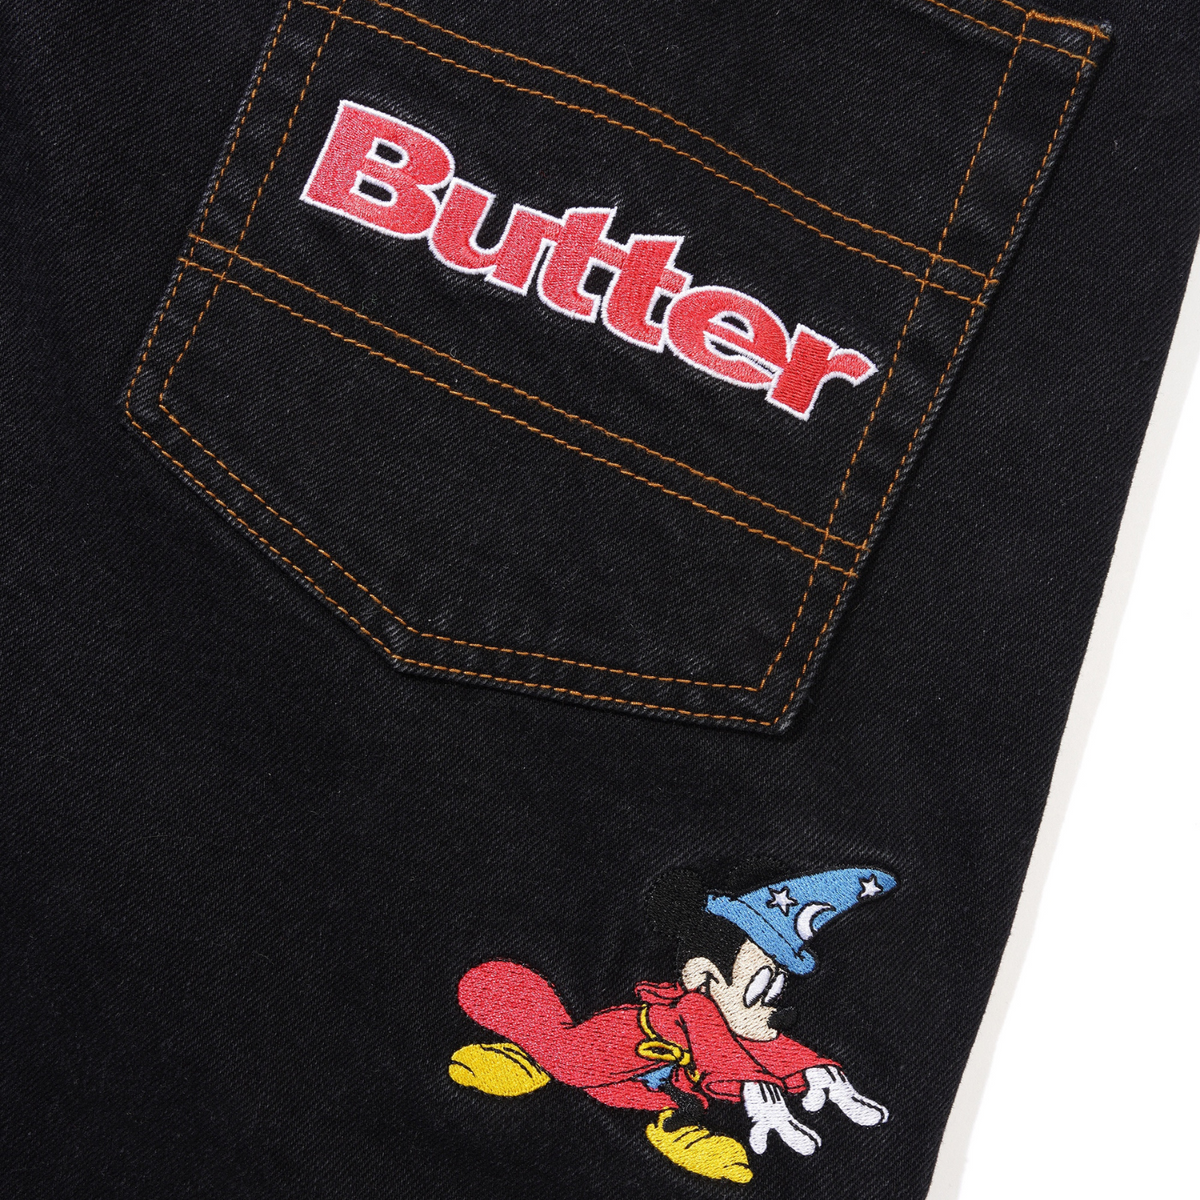 Butter Goods x Disney Fantasia Collection